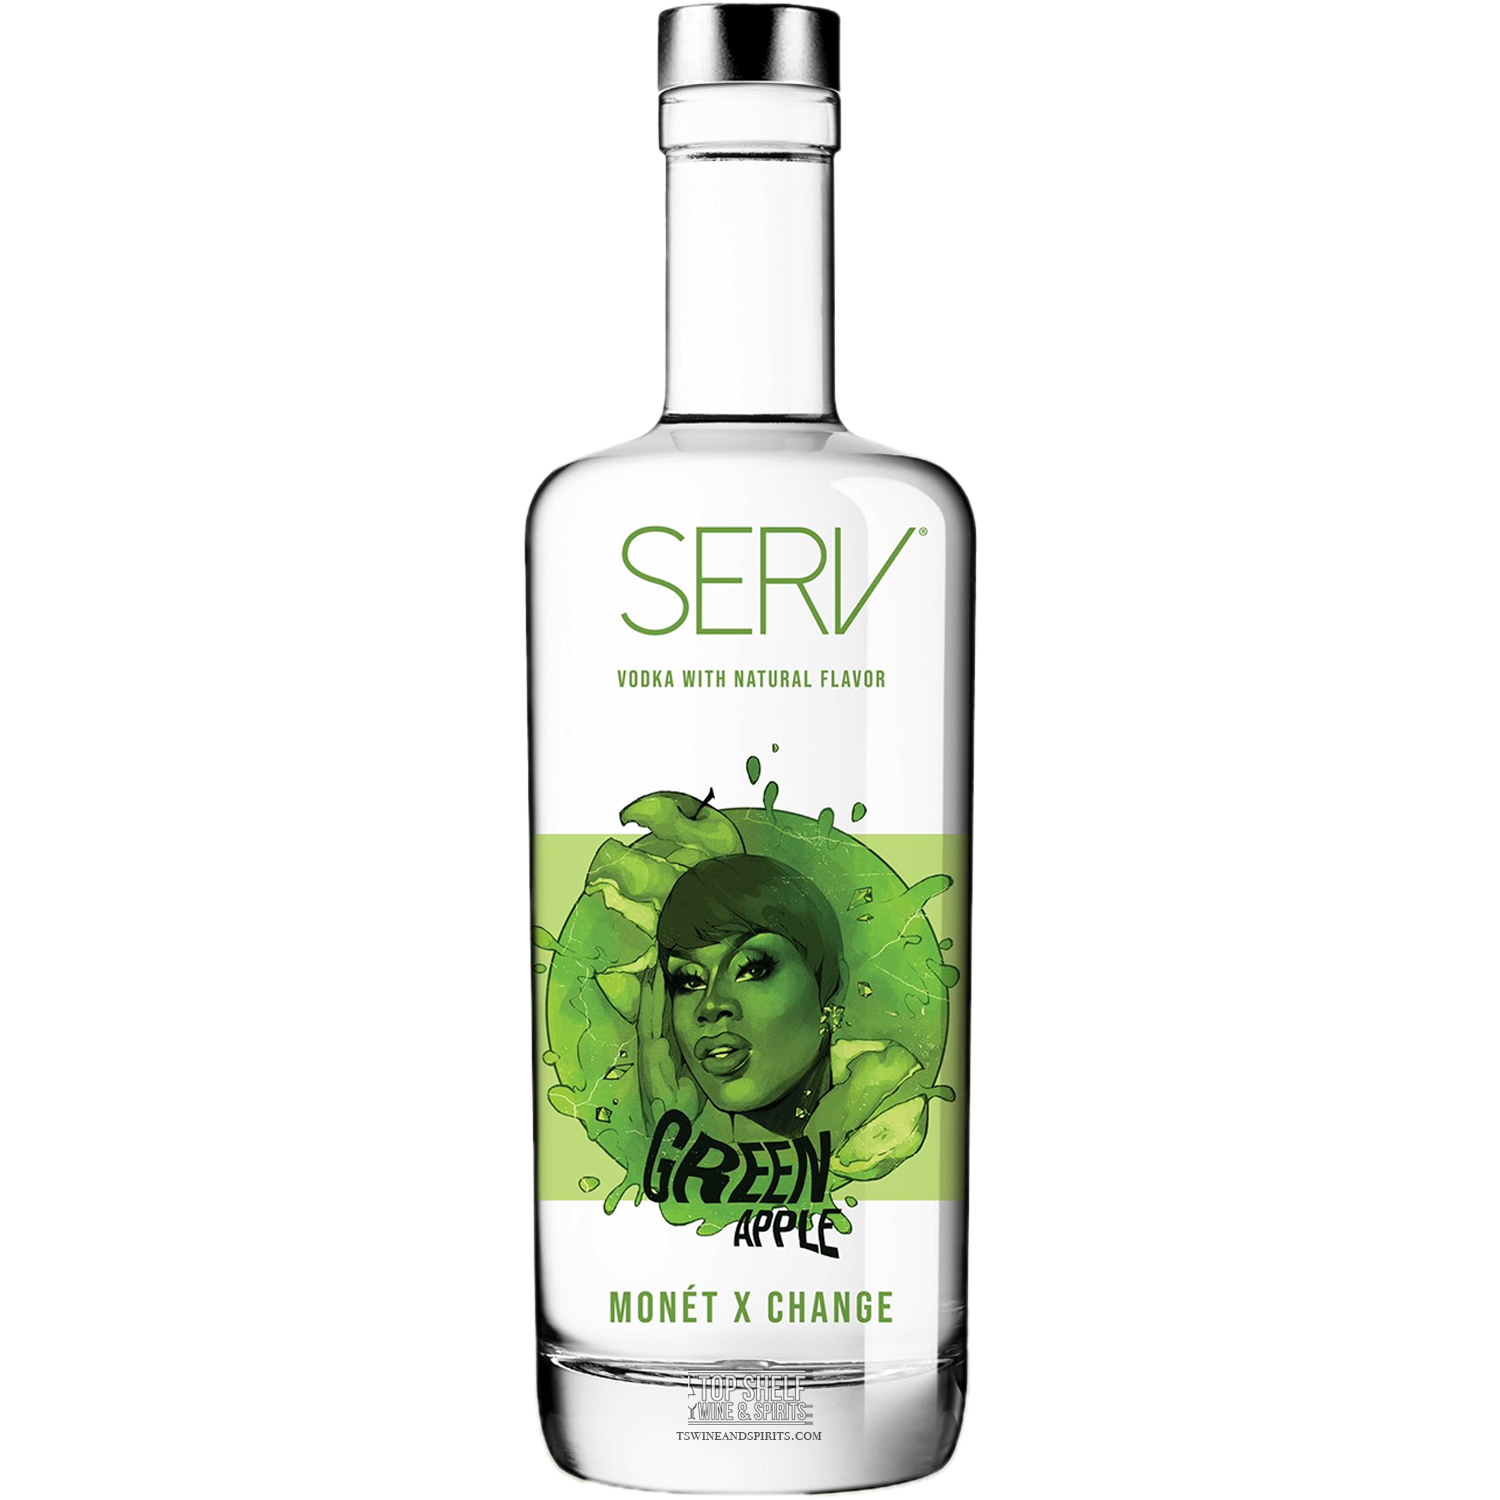 SERV Vodka Green Apple Monet X Change